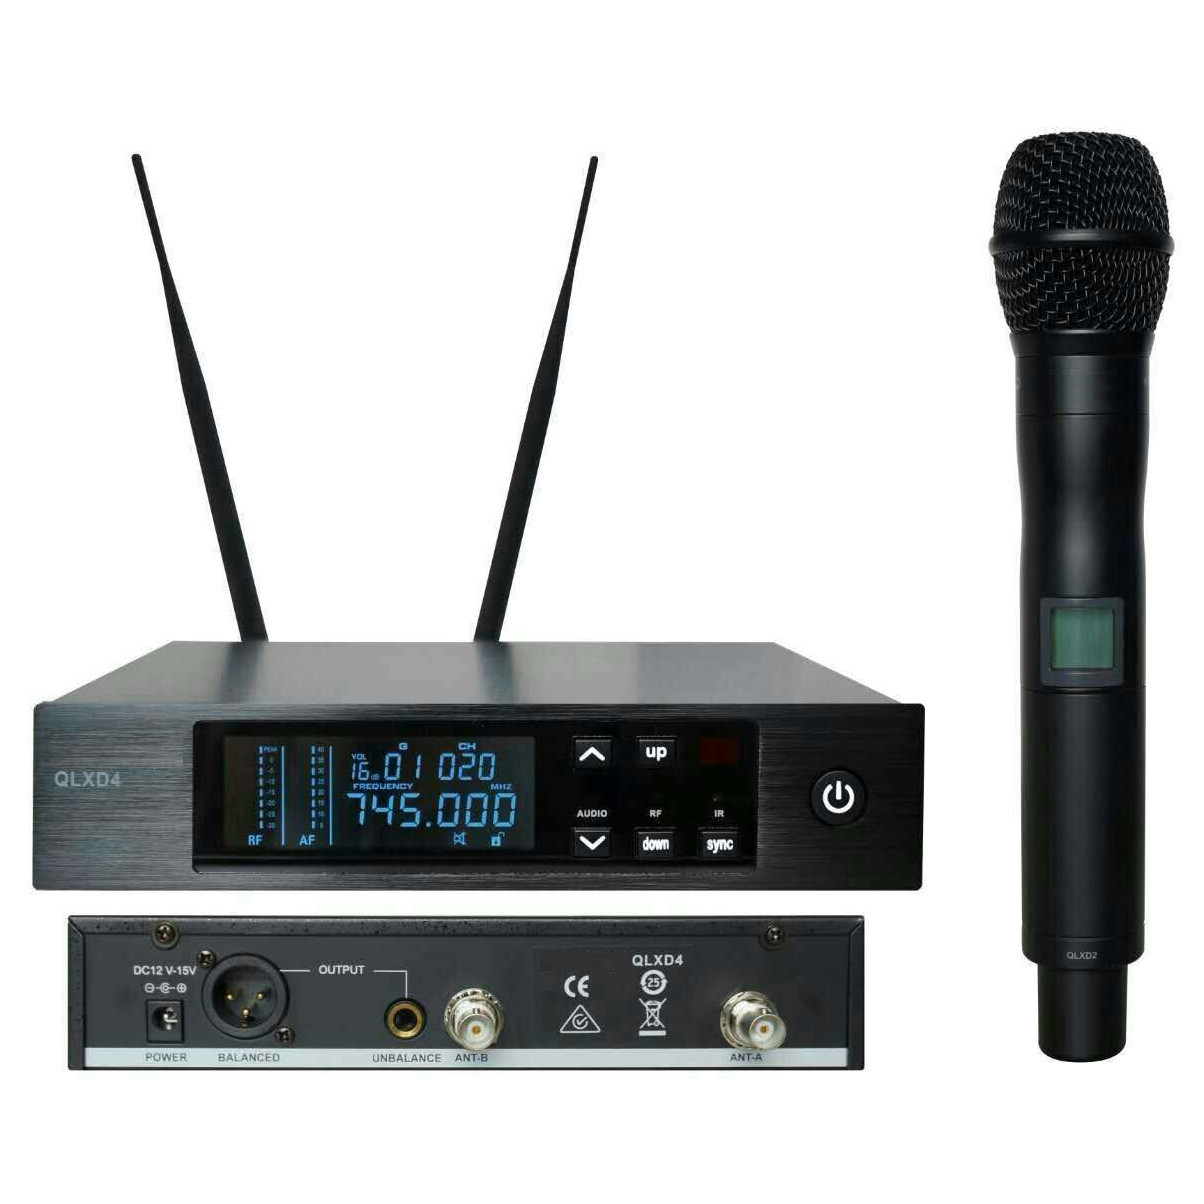 QLXD4 kablosuz mikrofonu sahnede kullanma